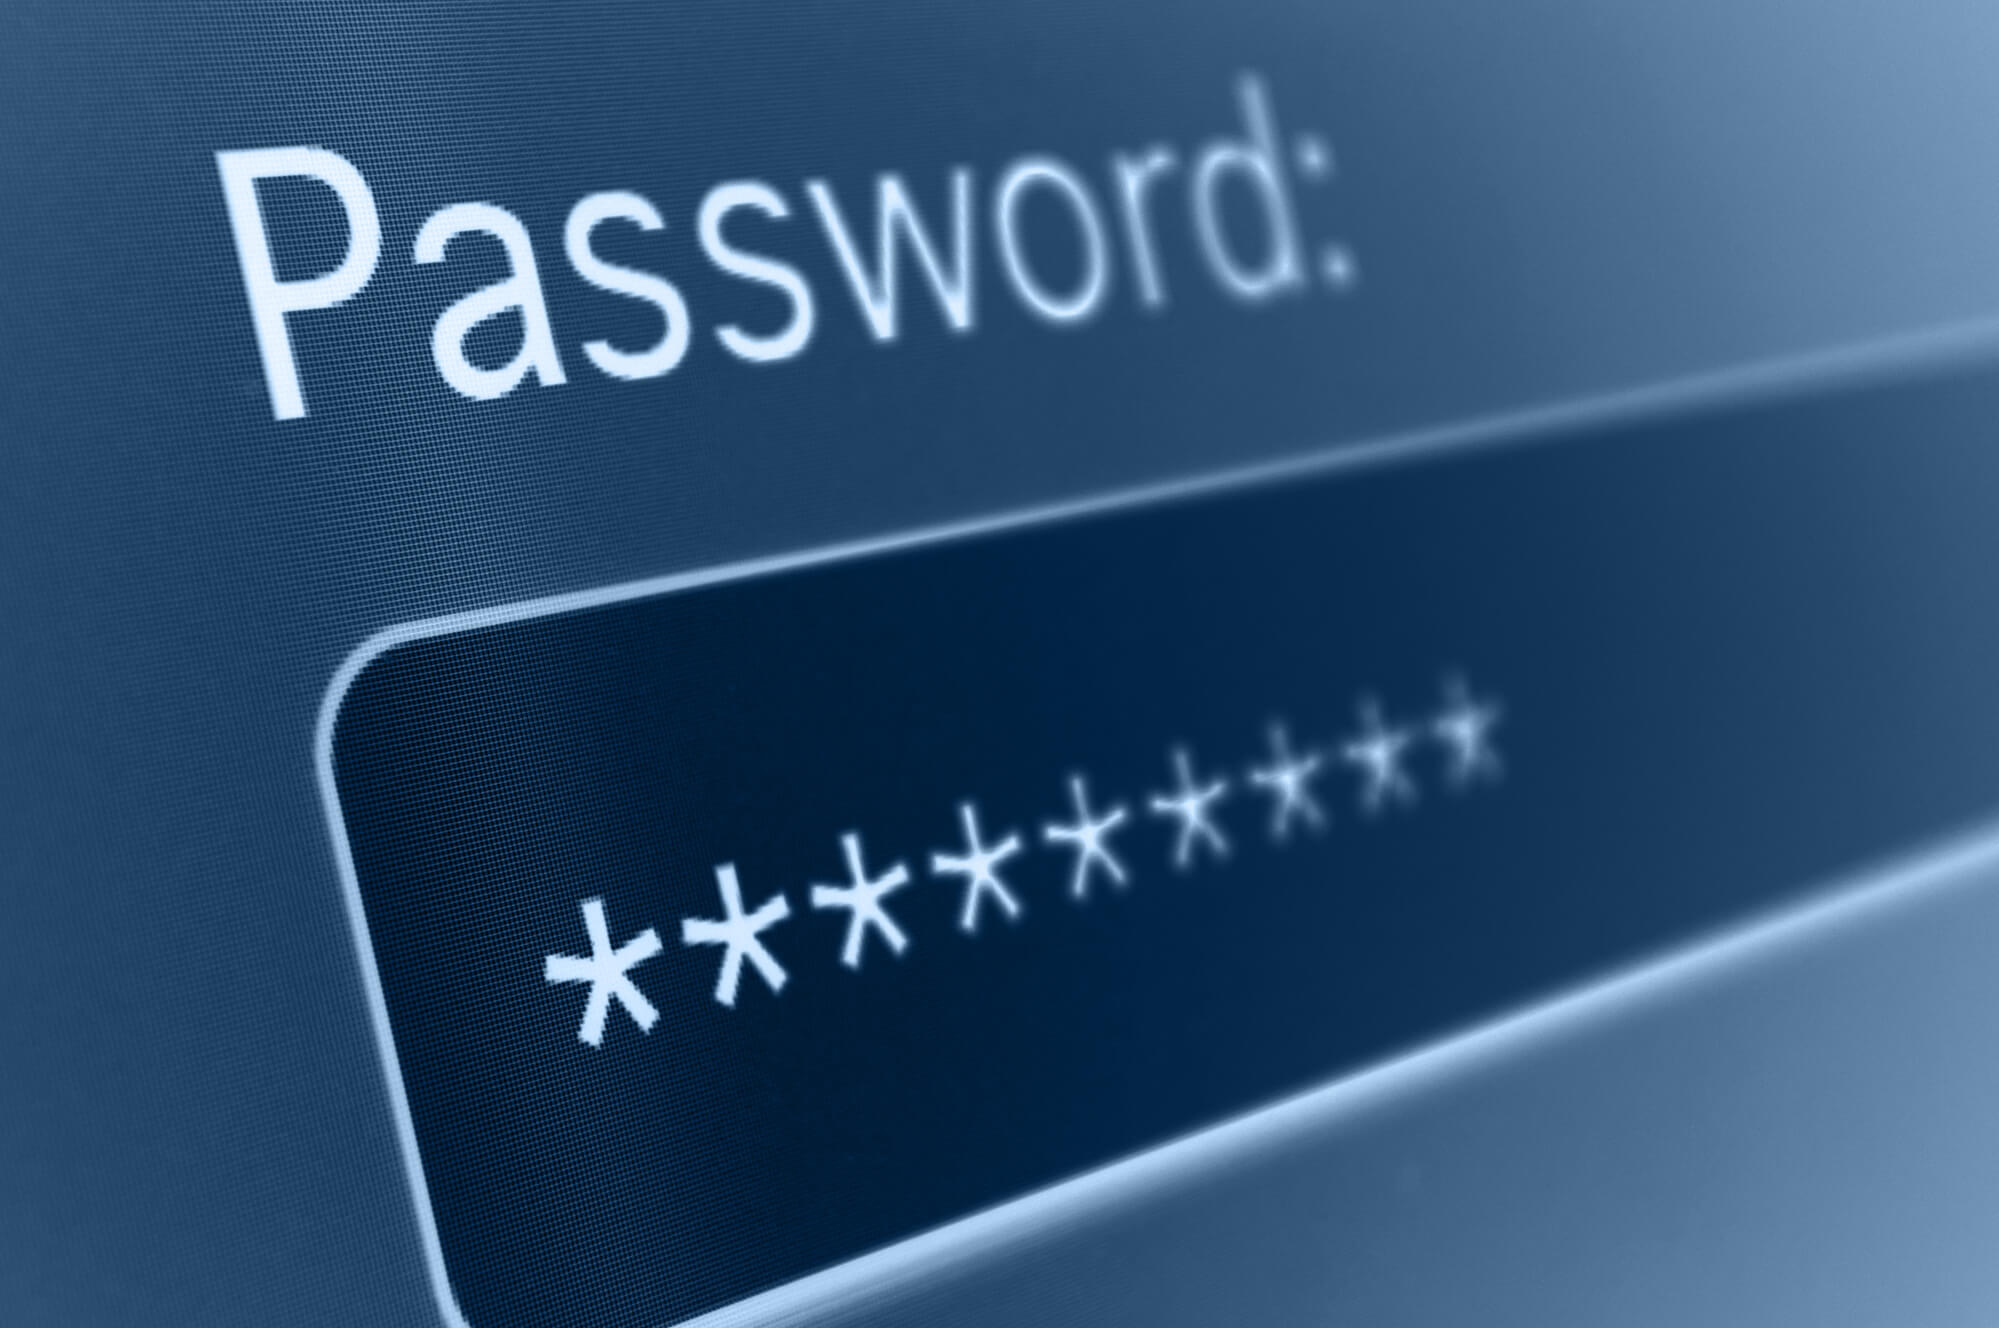 Closeup of a computer screen with a password login